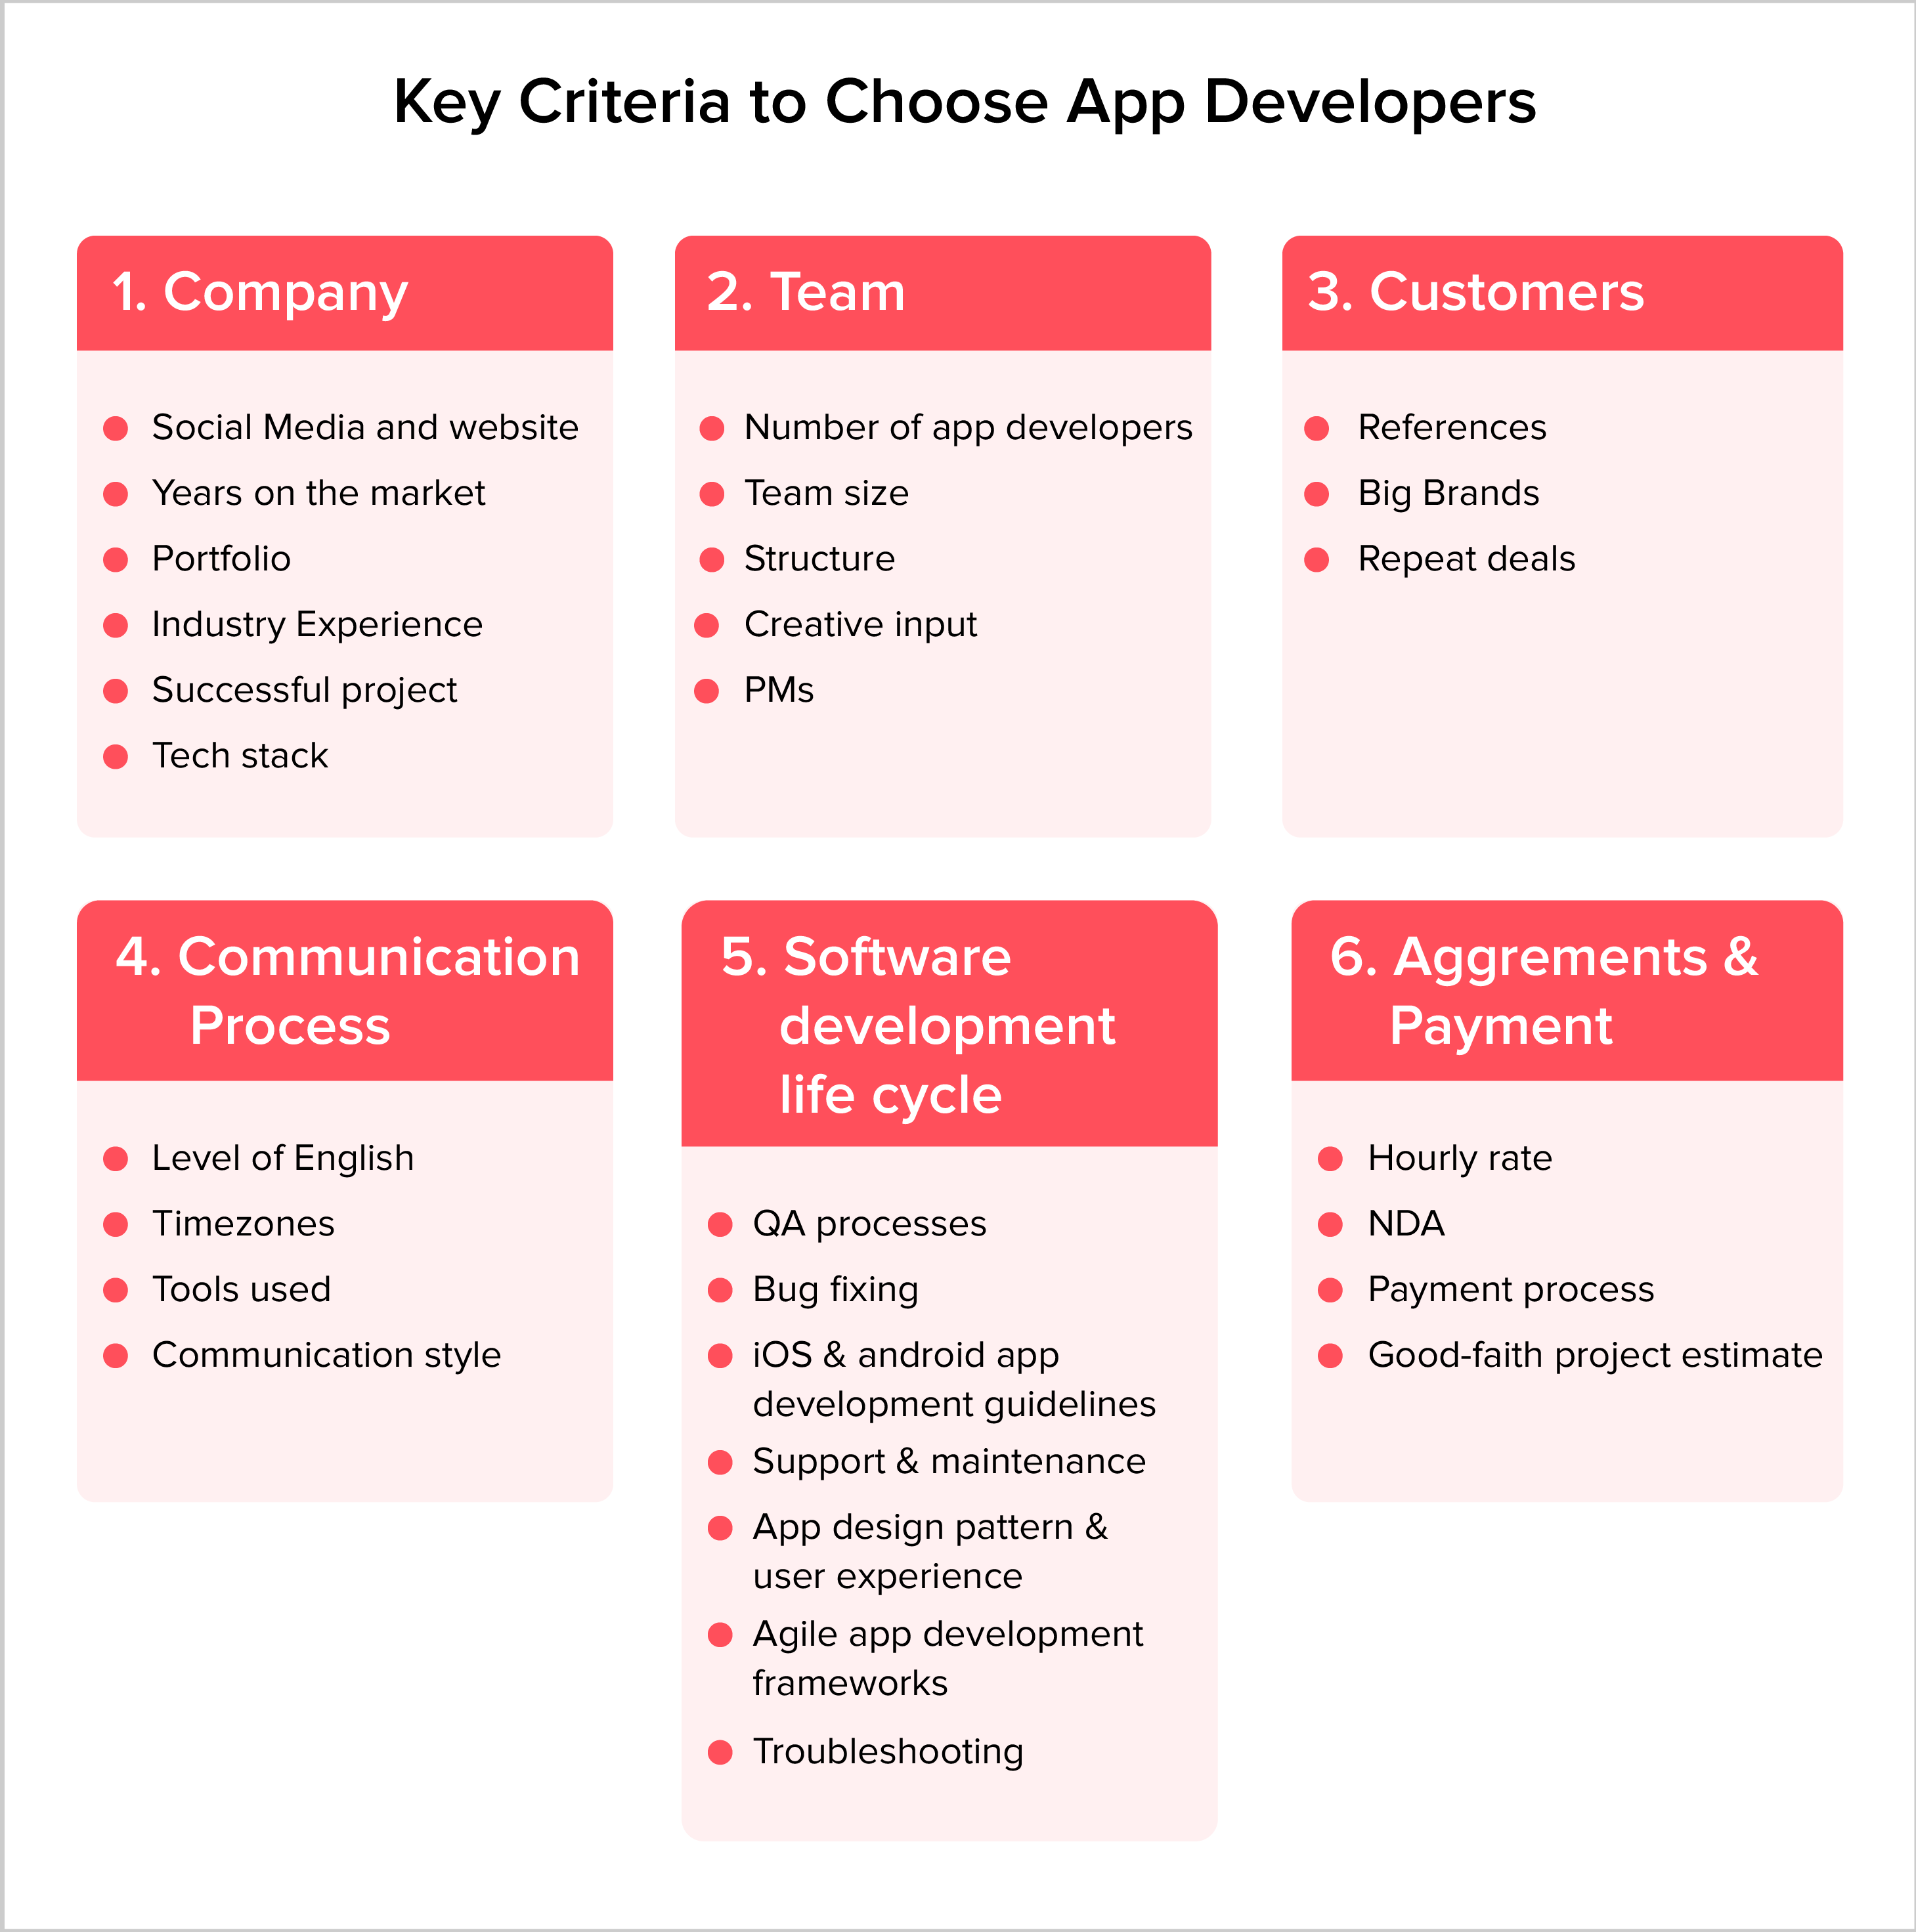 Key criteria to choose app developers